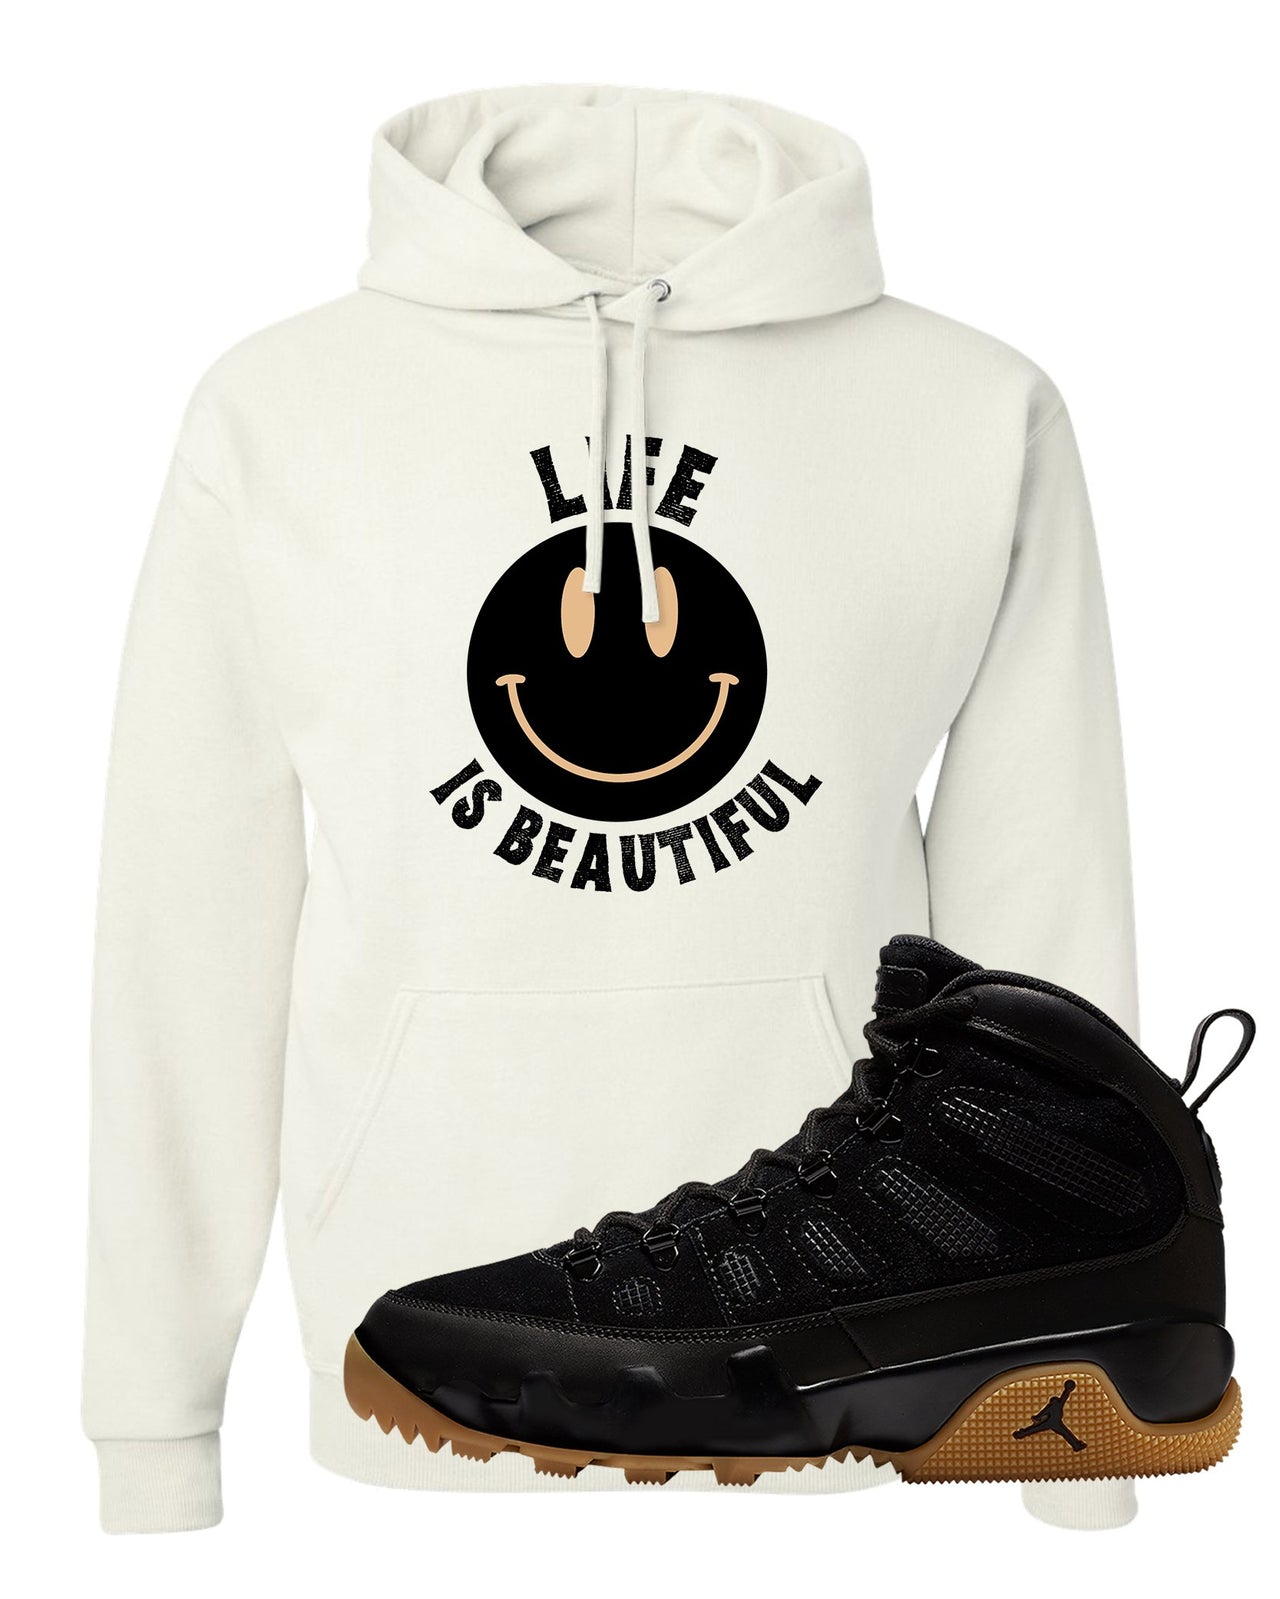 NRG Black Gum Boot 9s Hoodie | Smile Life Is Beautiful, White